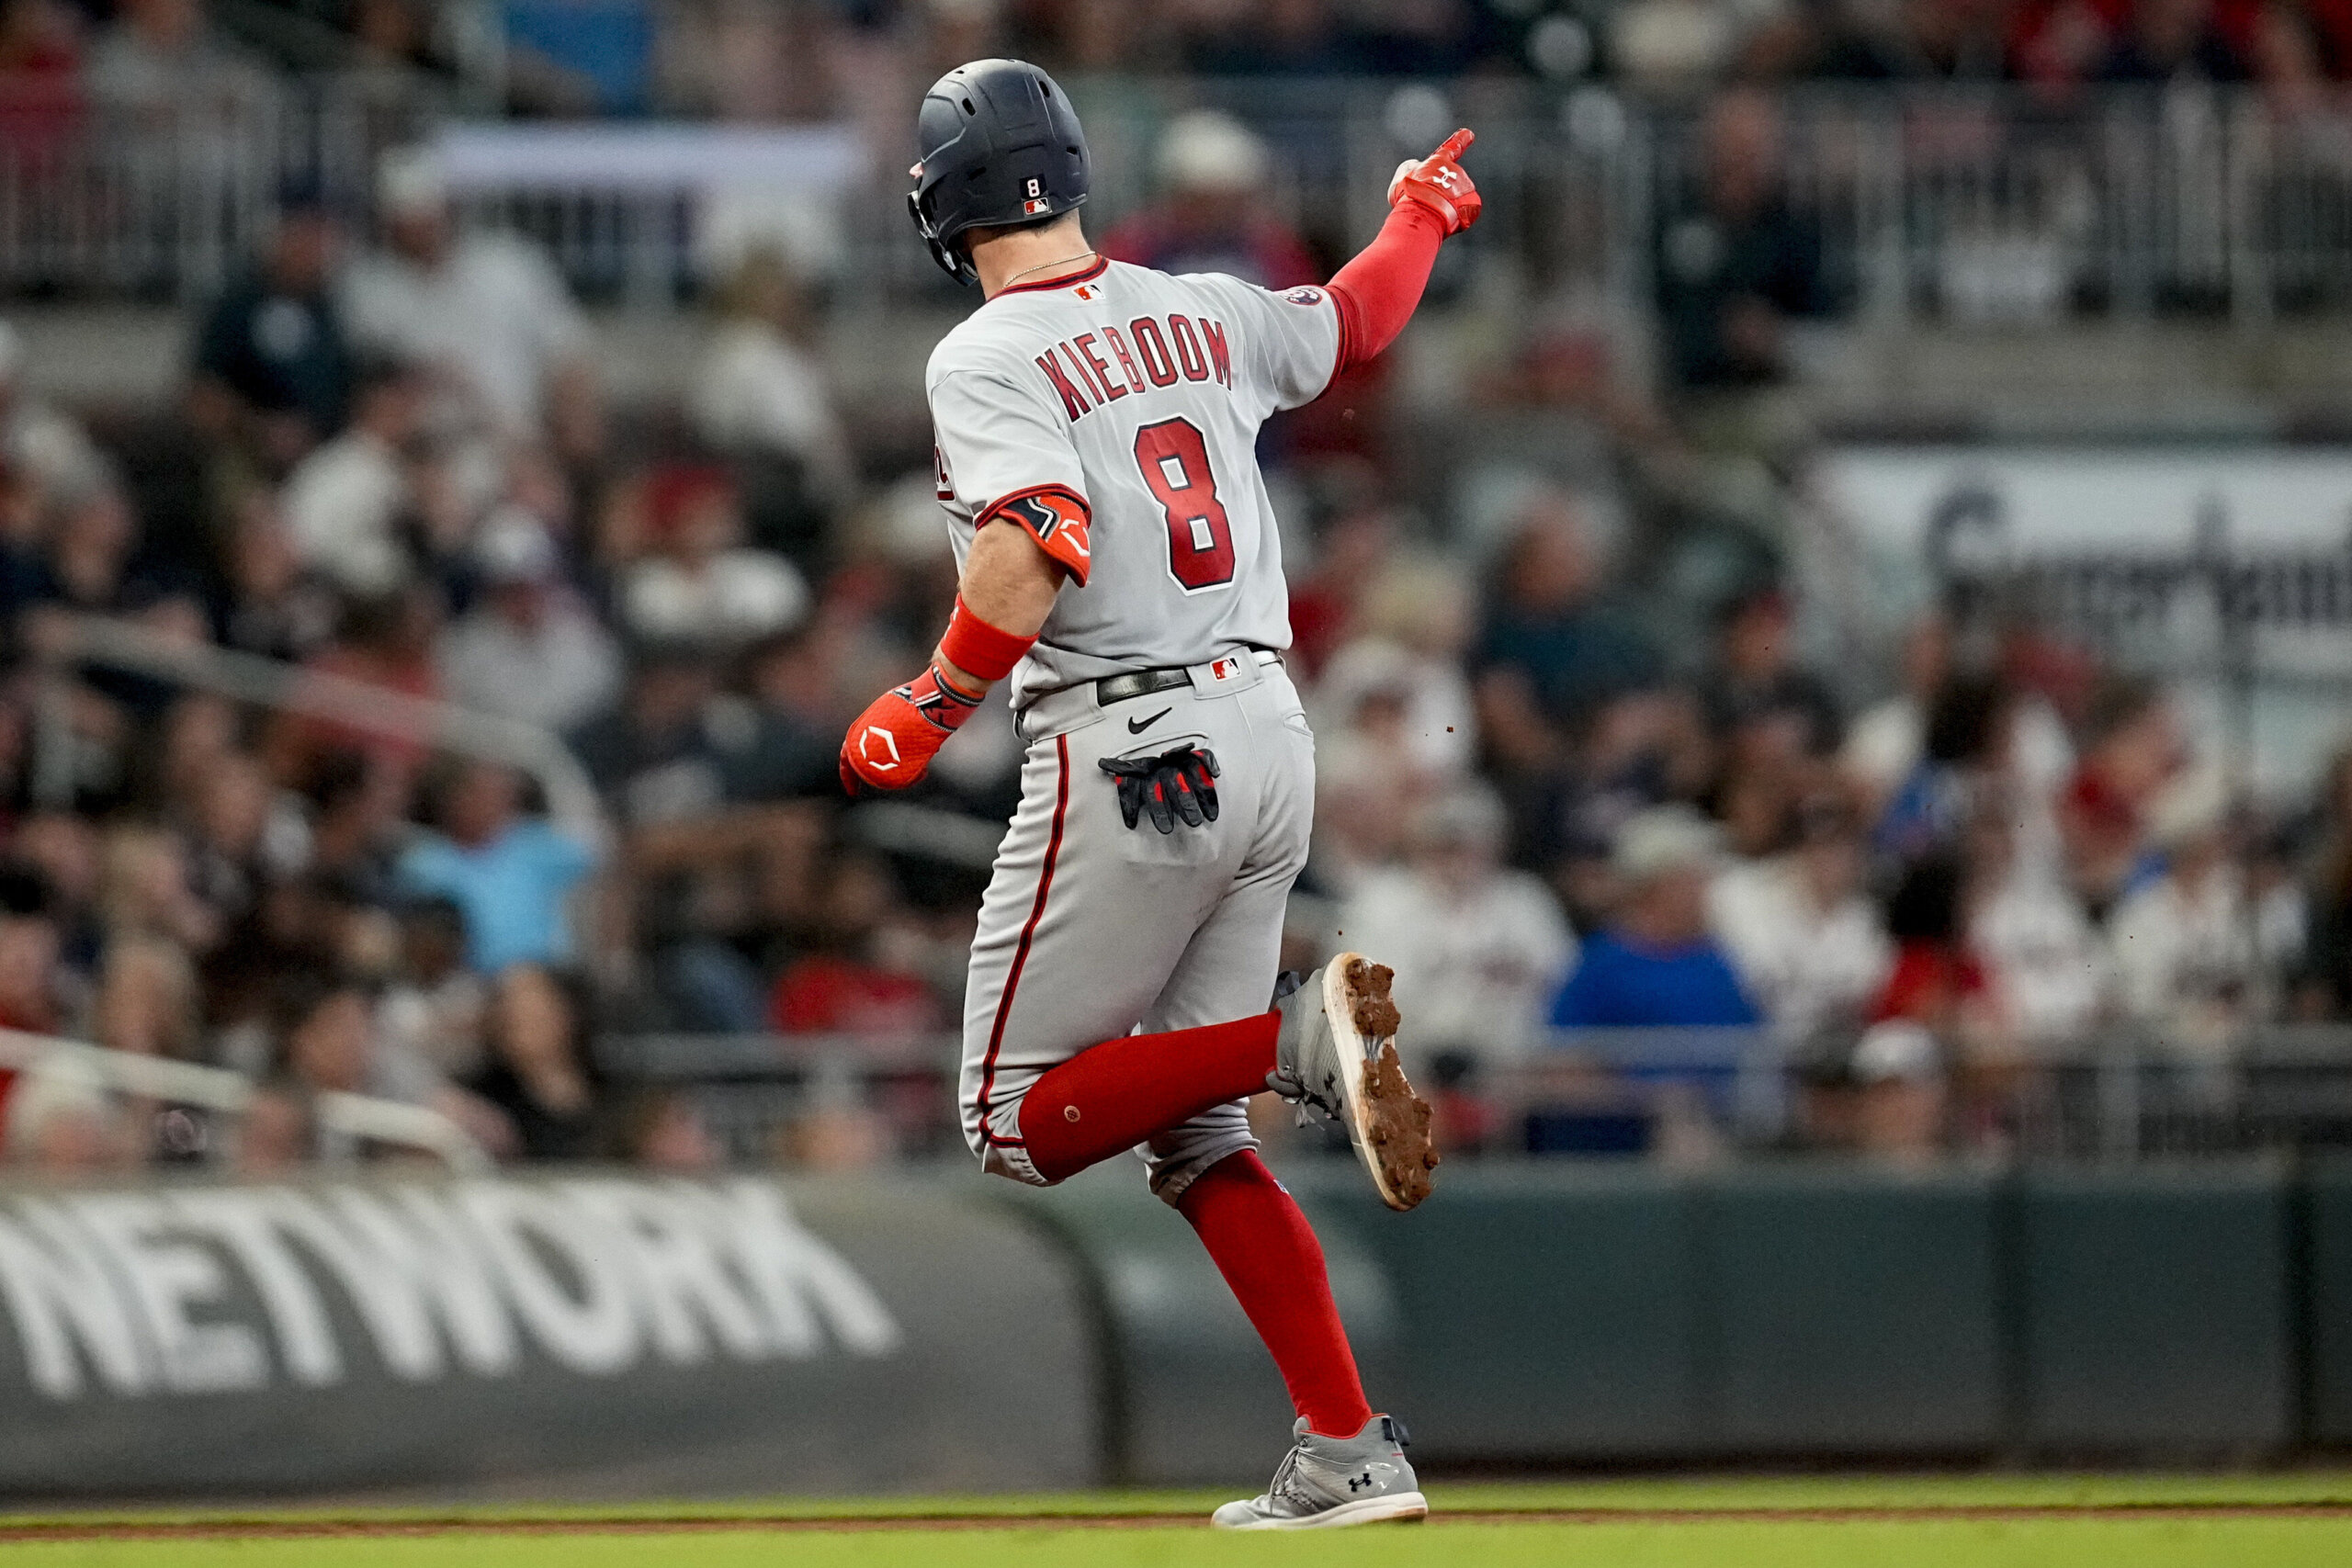 Brian Jordan of the Atlanta Braves celebrates his two-run home run